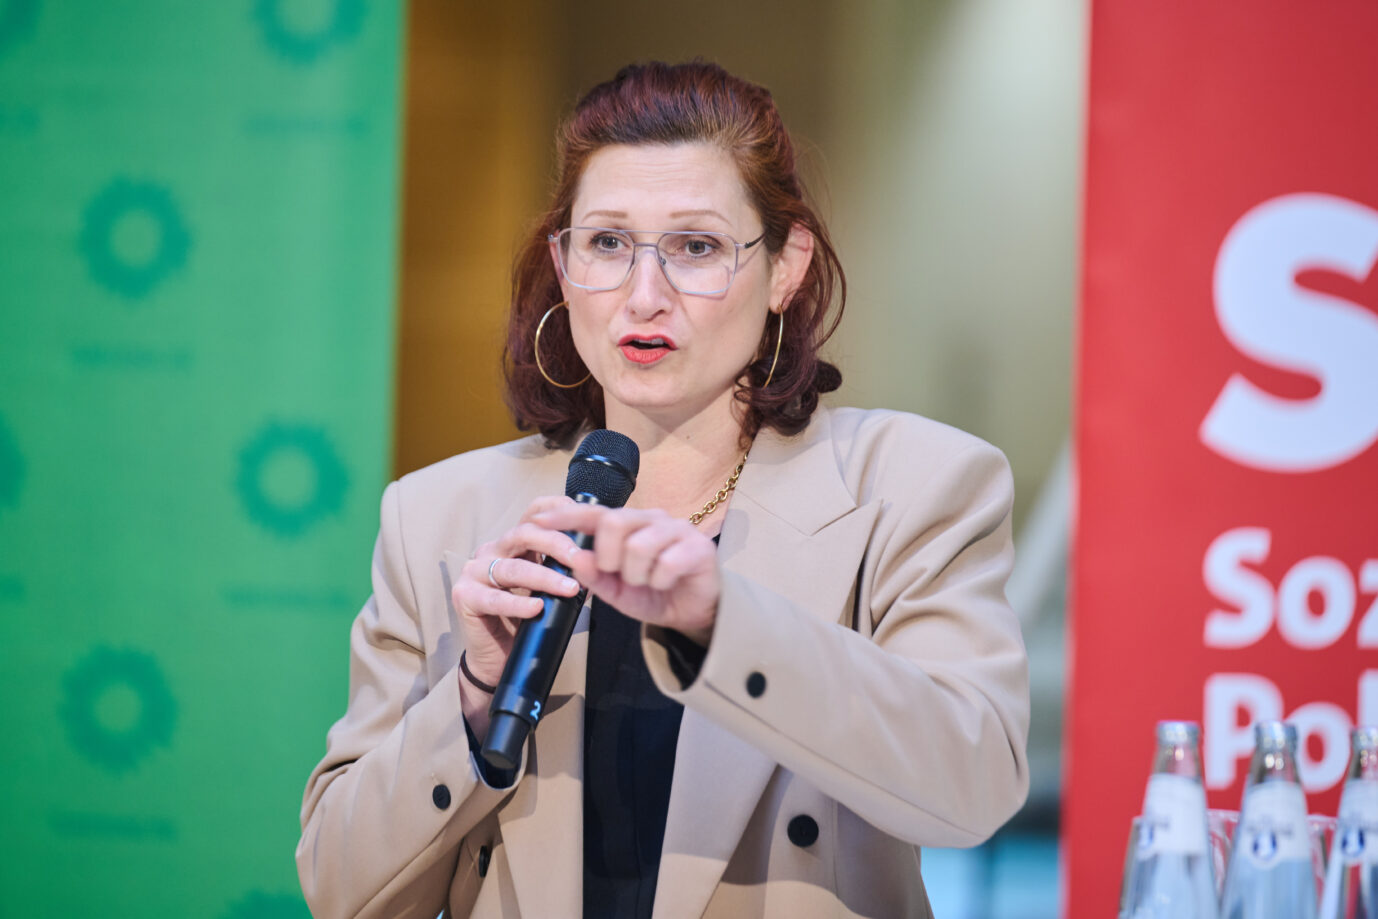 Ferda Ataman criticizes the gender ban